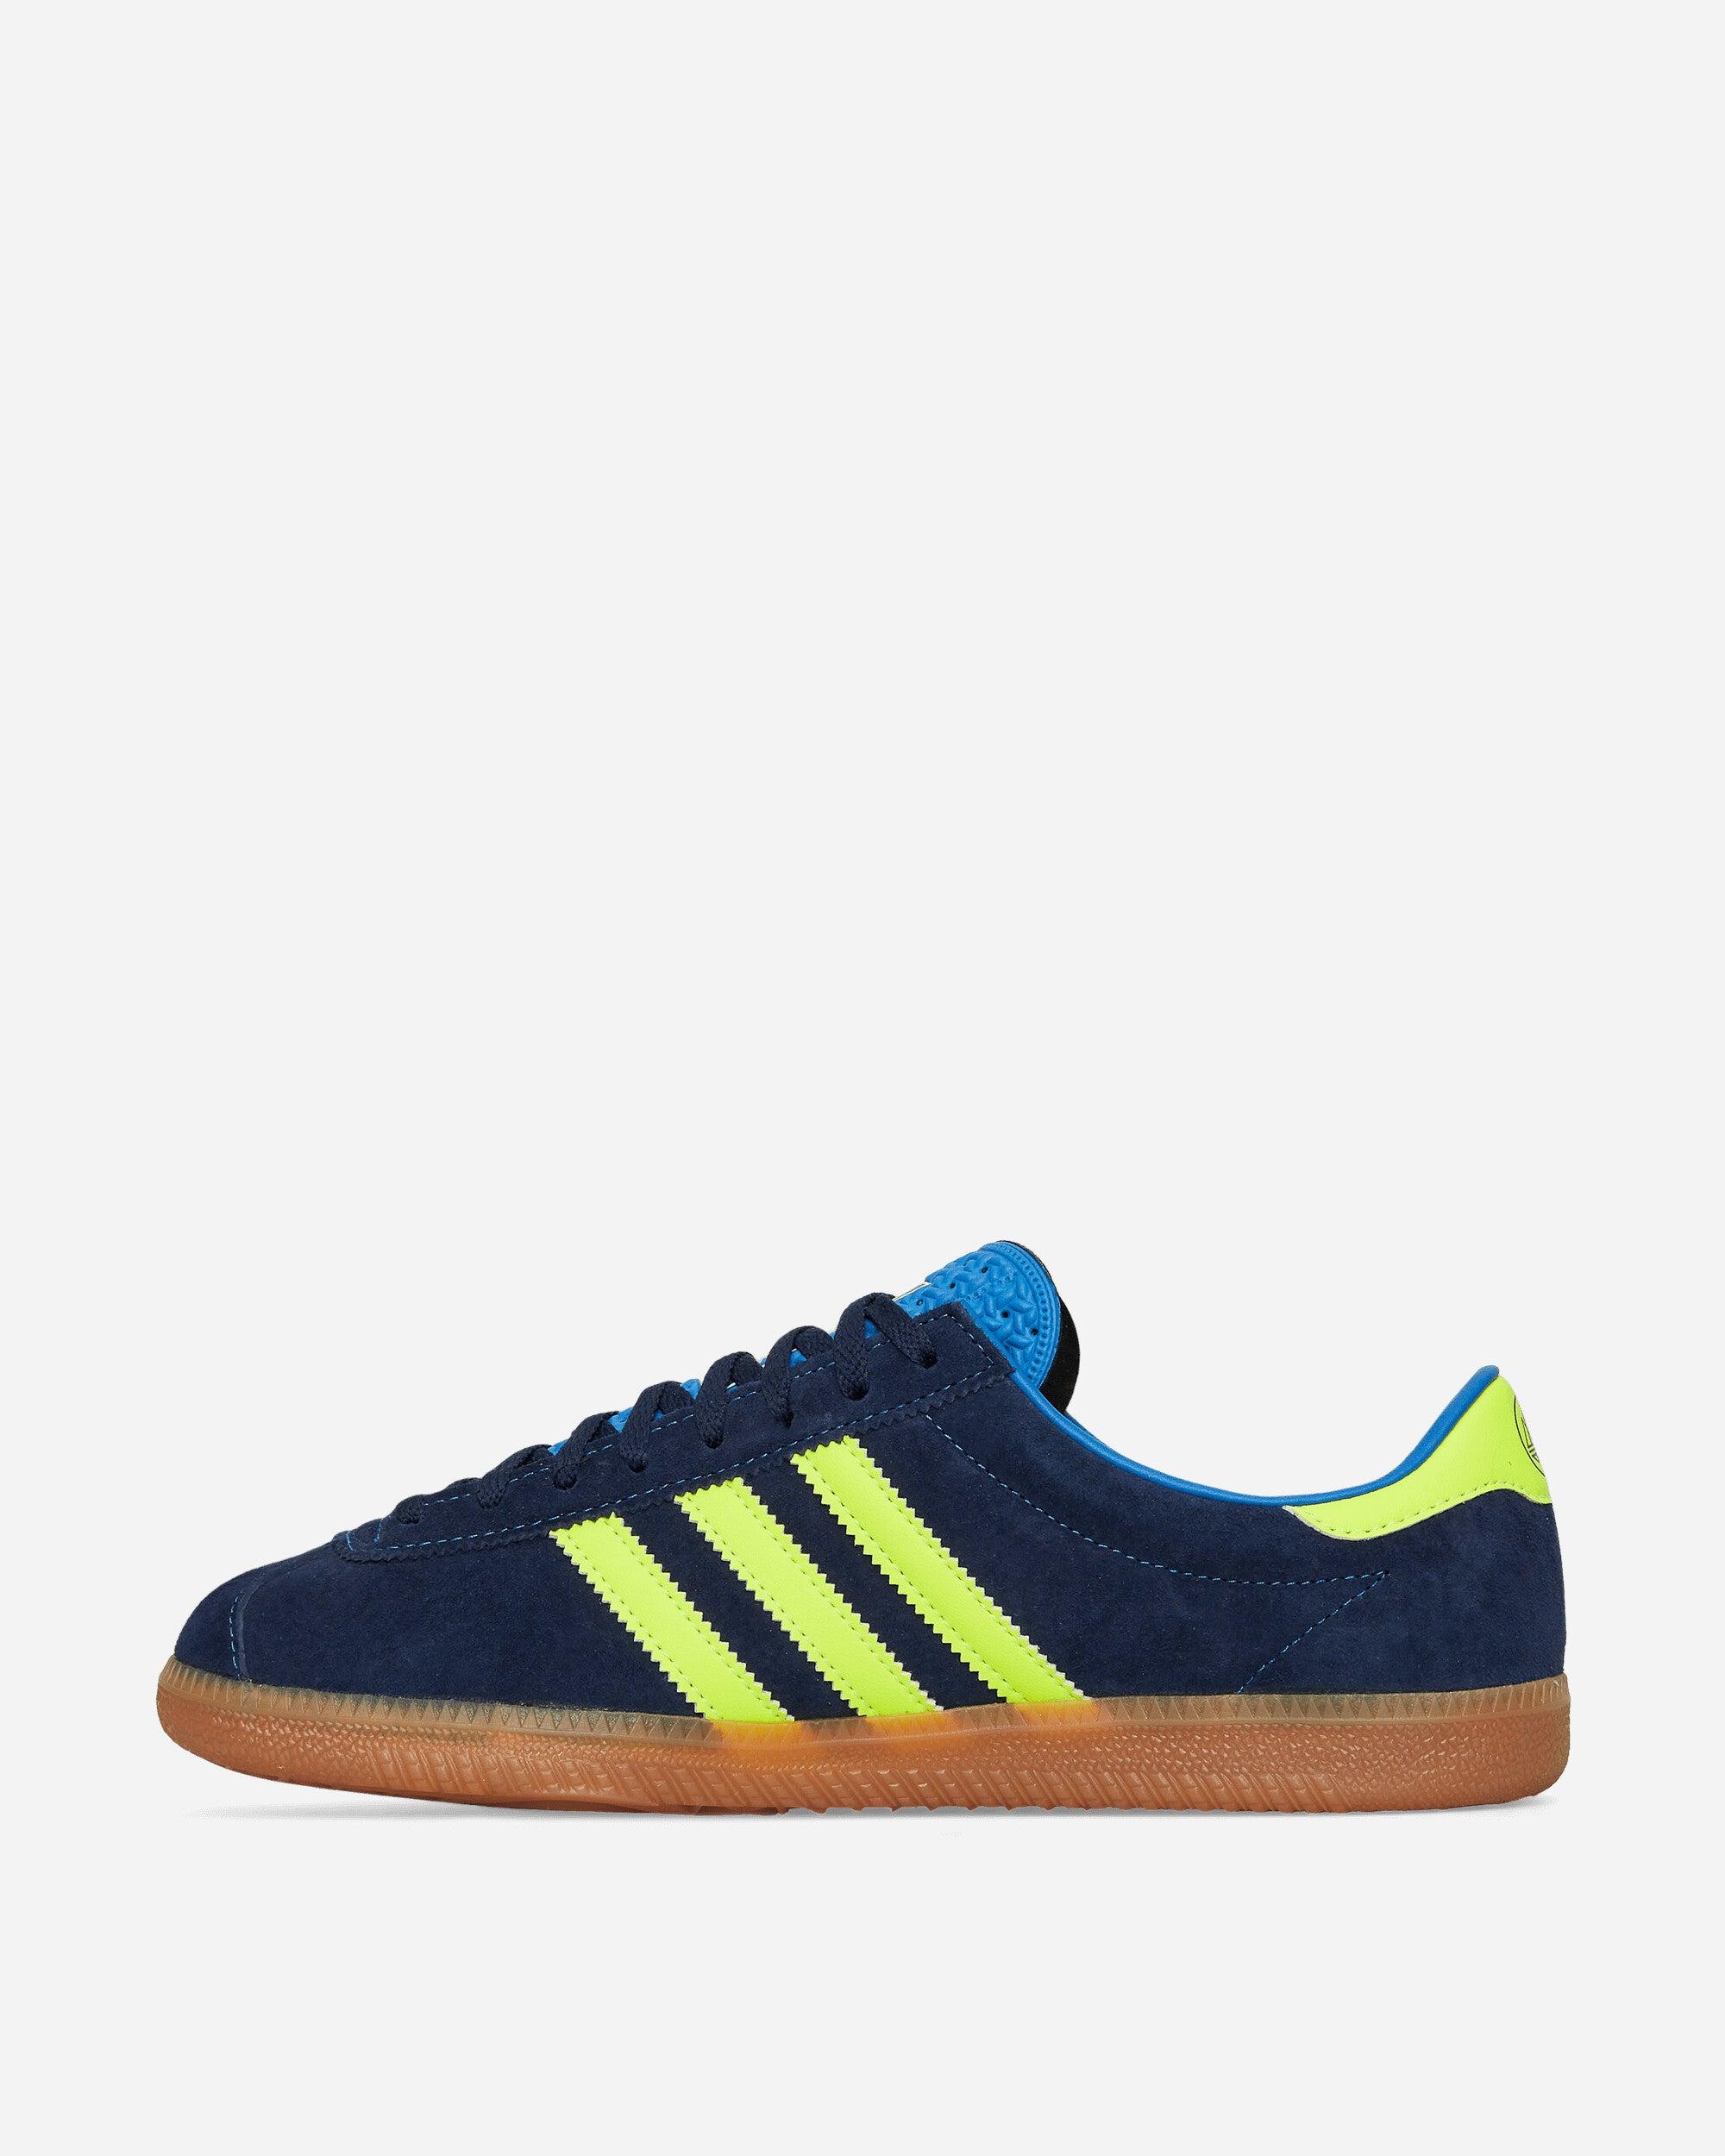 adidas Spezial Hochelaga Sneakers Blue for Men | Lyst